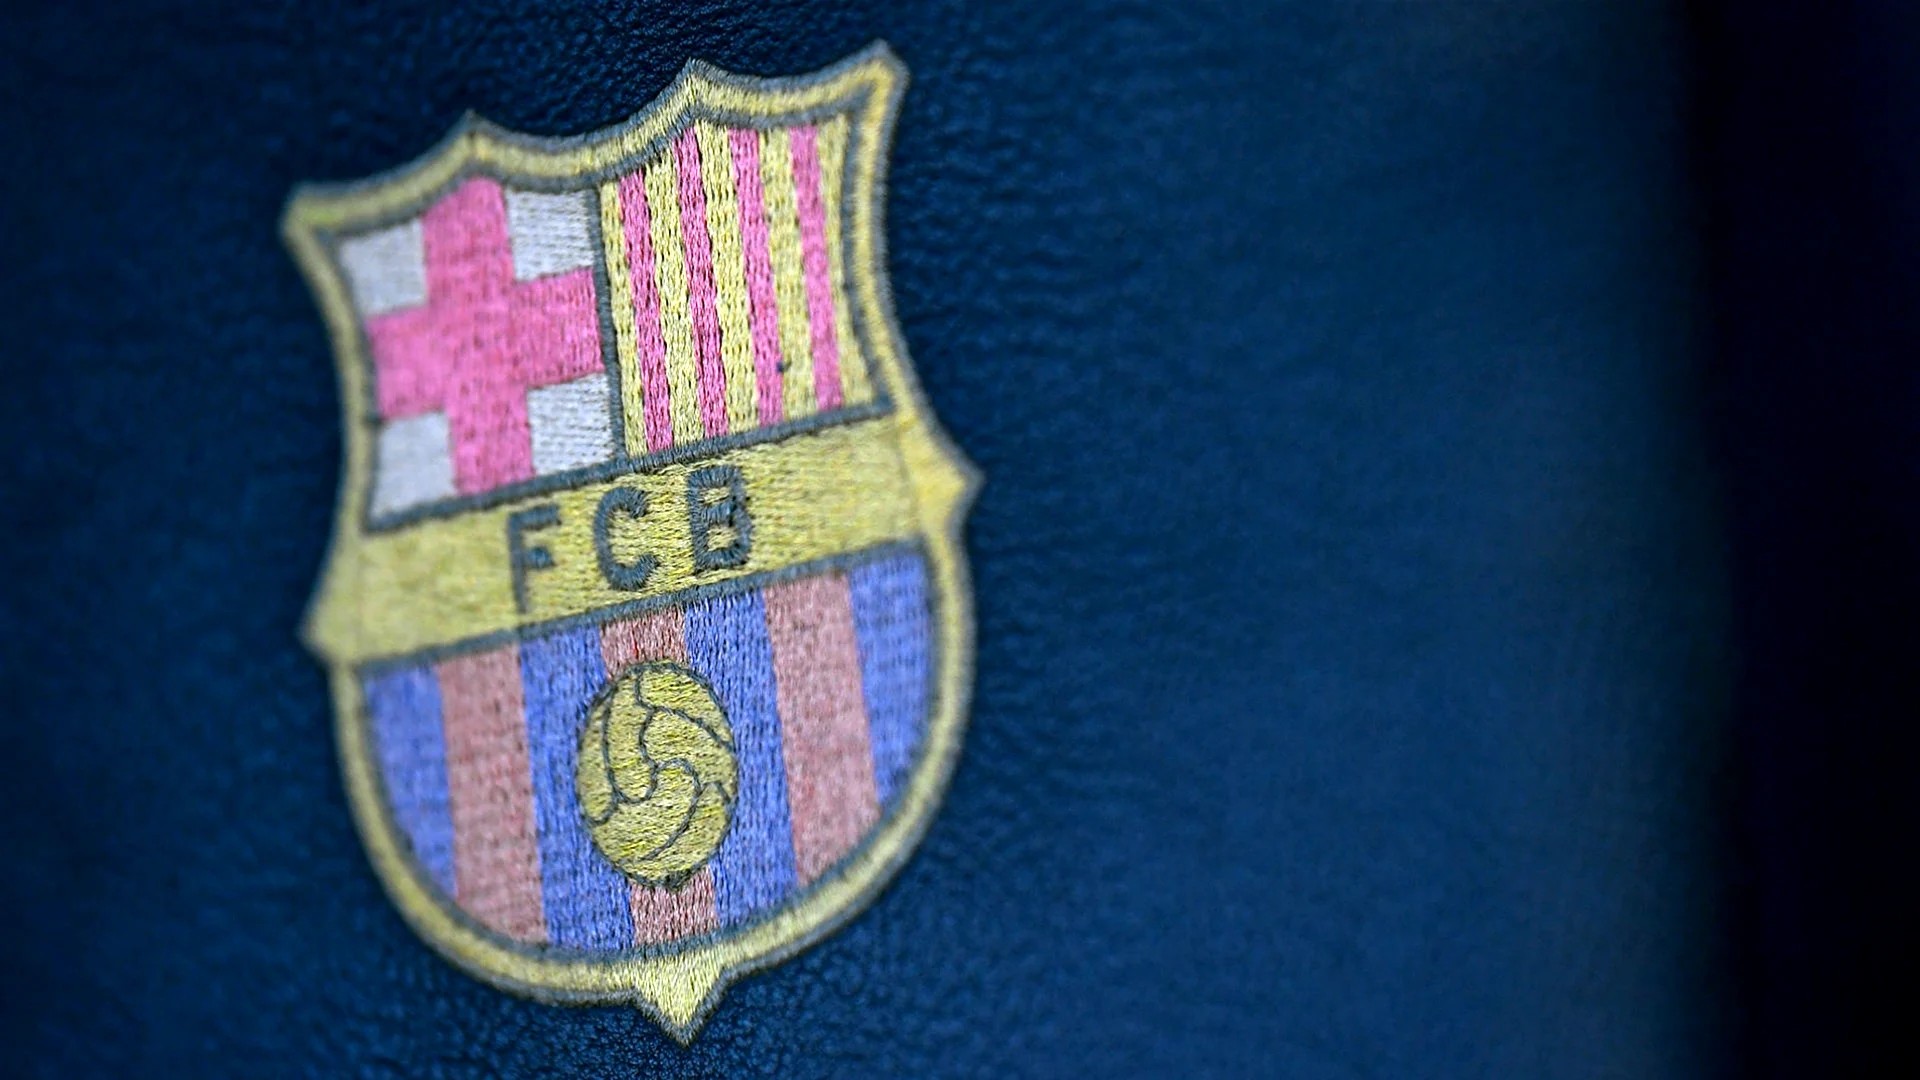 ФК Барселона на серо-голубом фоне